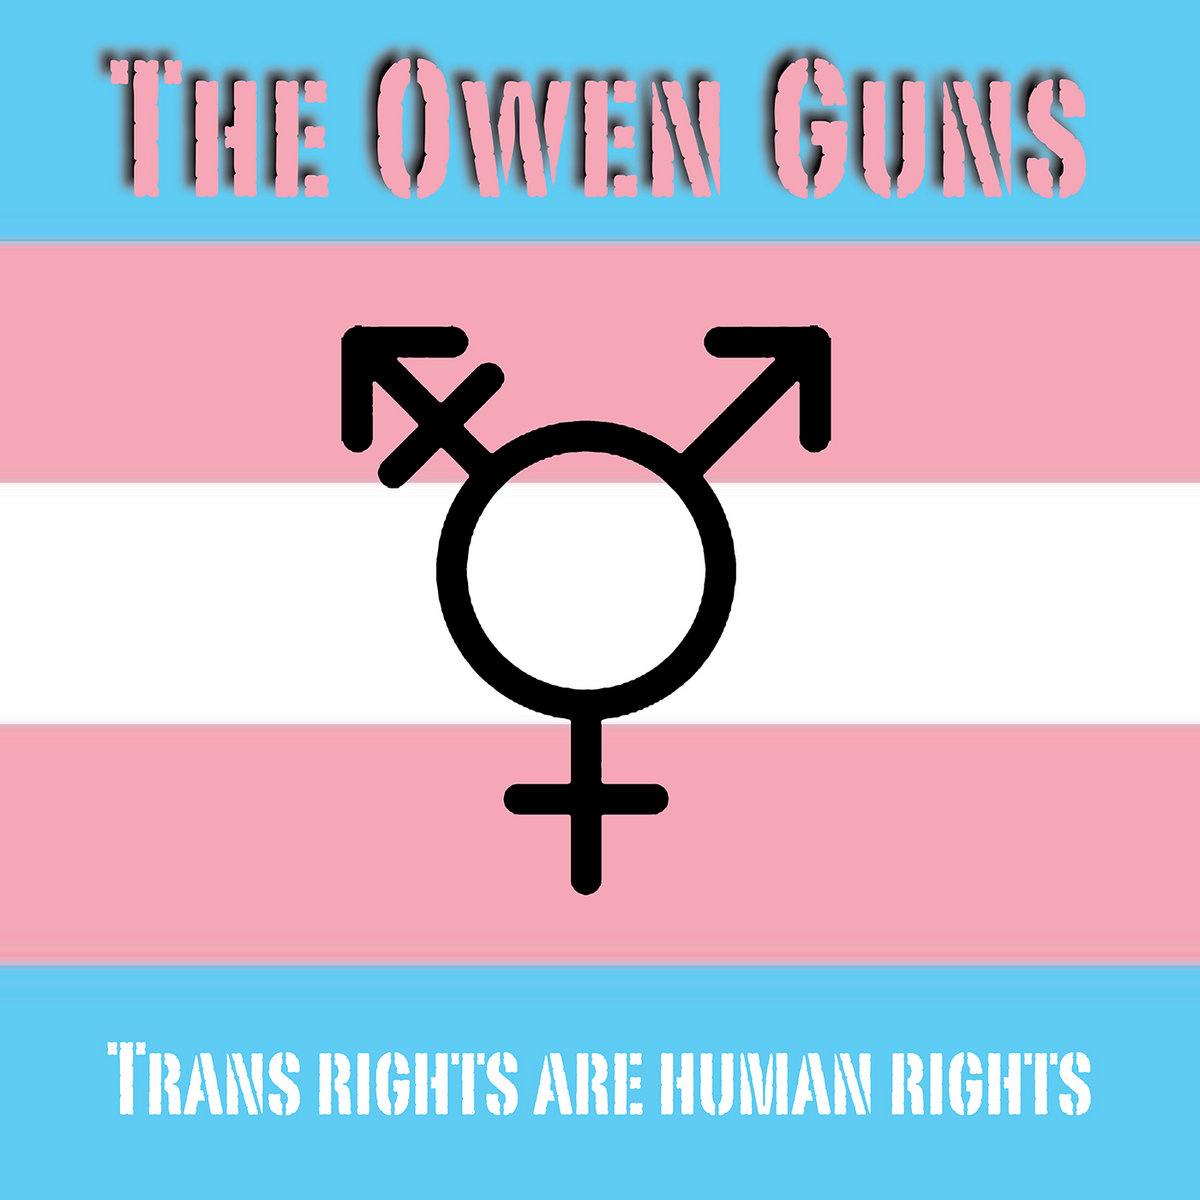  Te recomendamos: abnei6un6, The Owen Guns, Olivia Reid y Quarters Of Change